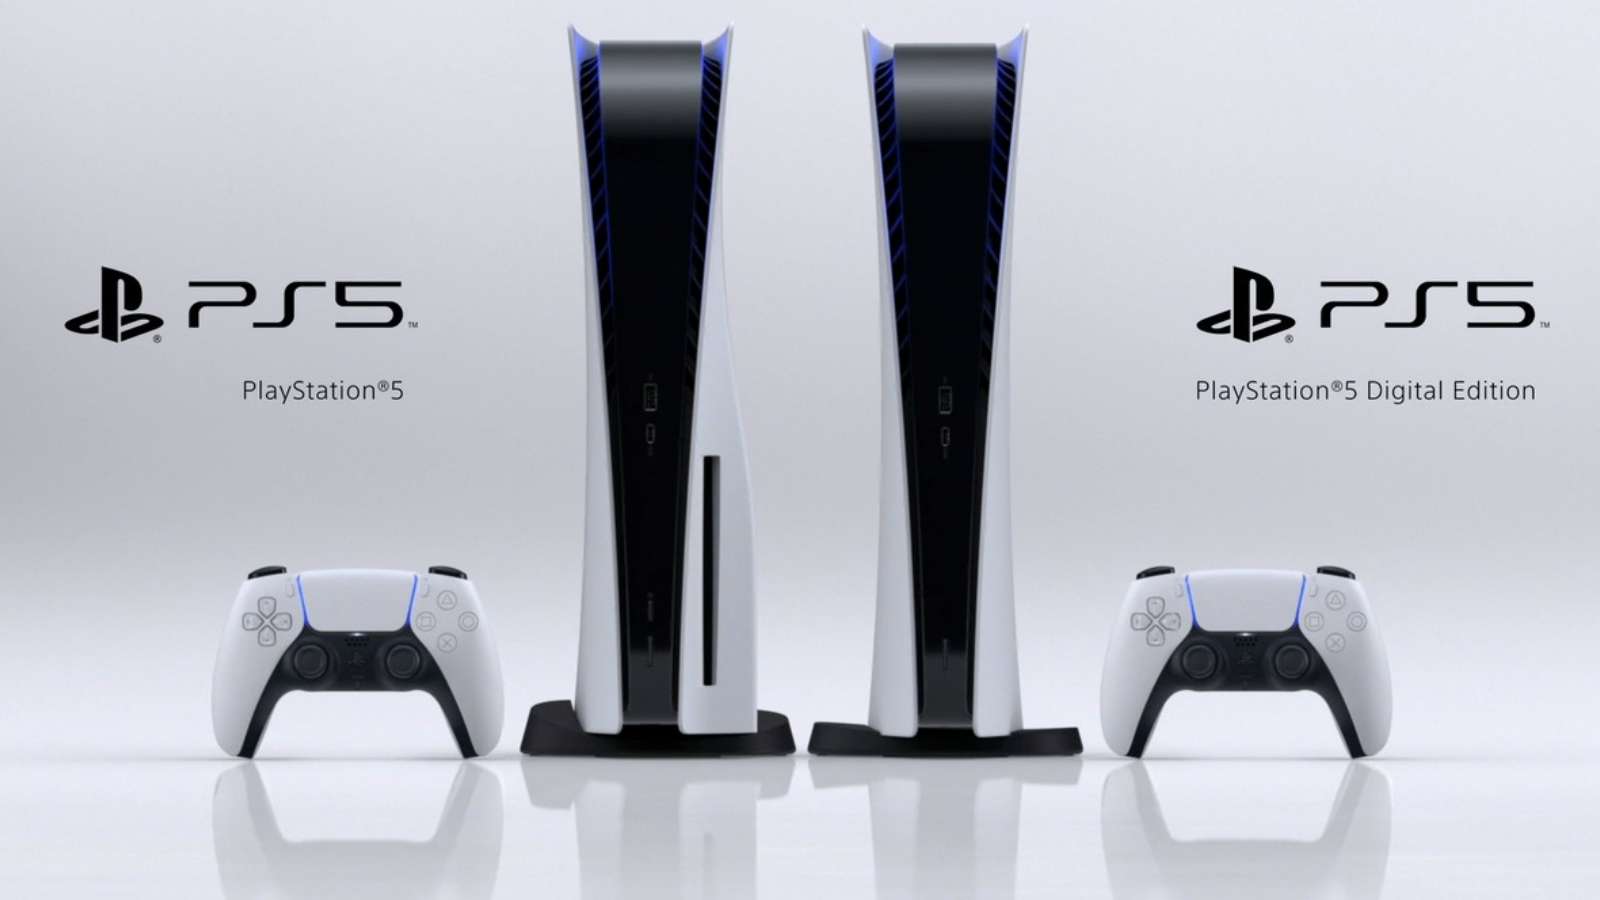 PlayStation 5 models side by side.